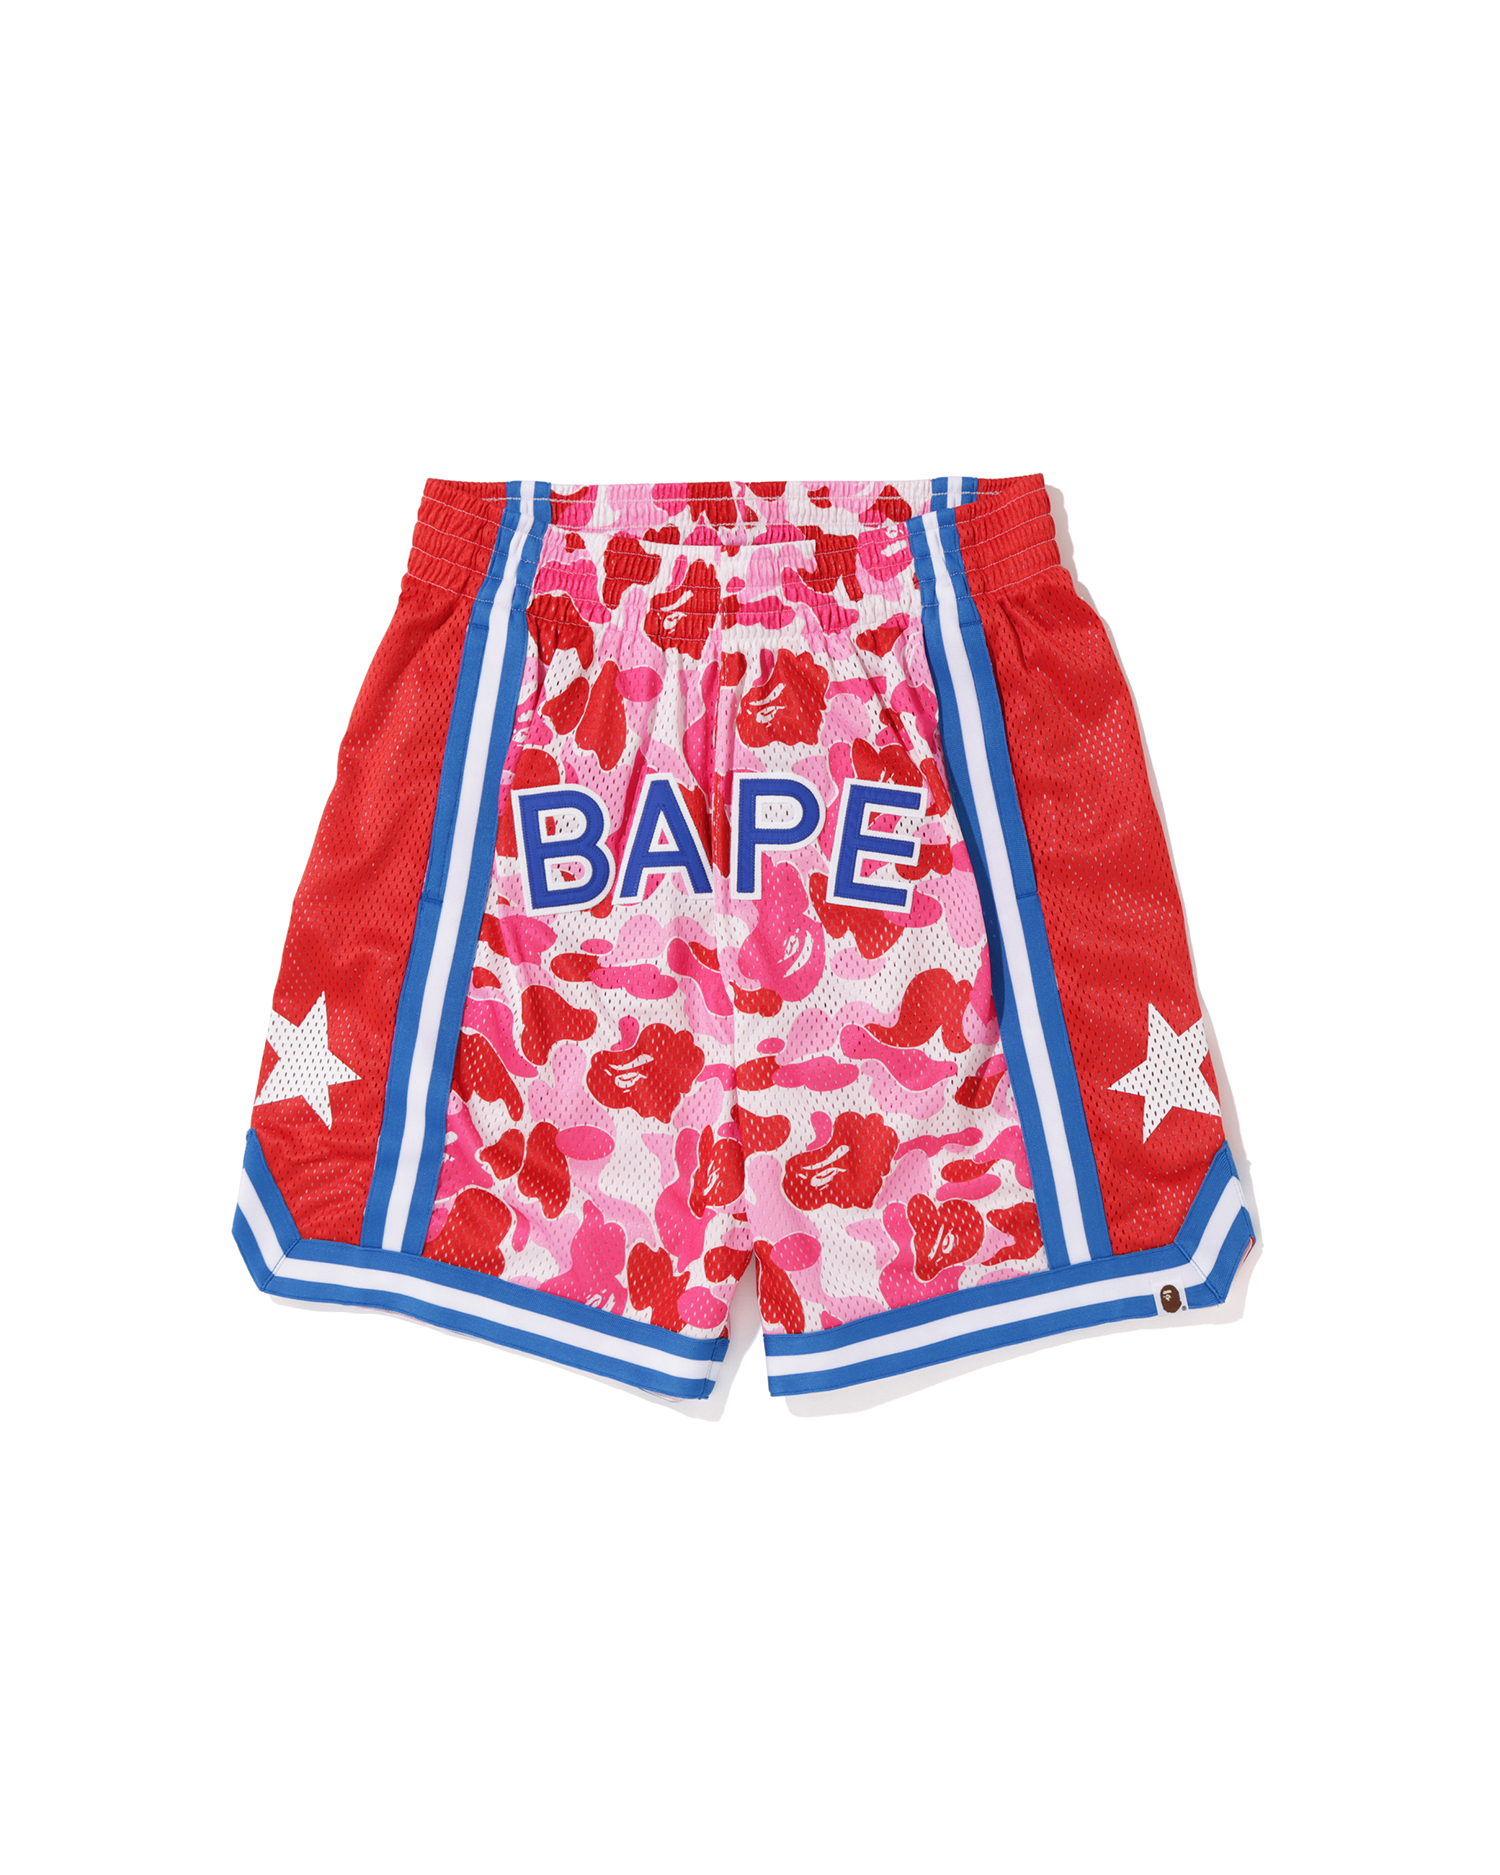 Shop ABC basketball shorts Online | BAPE